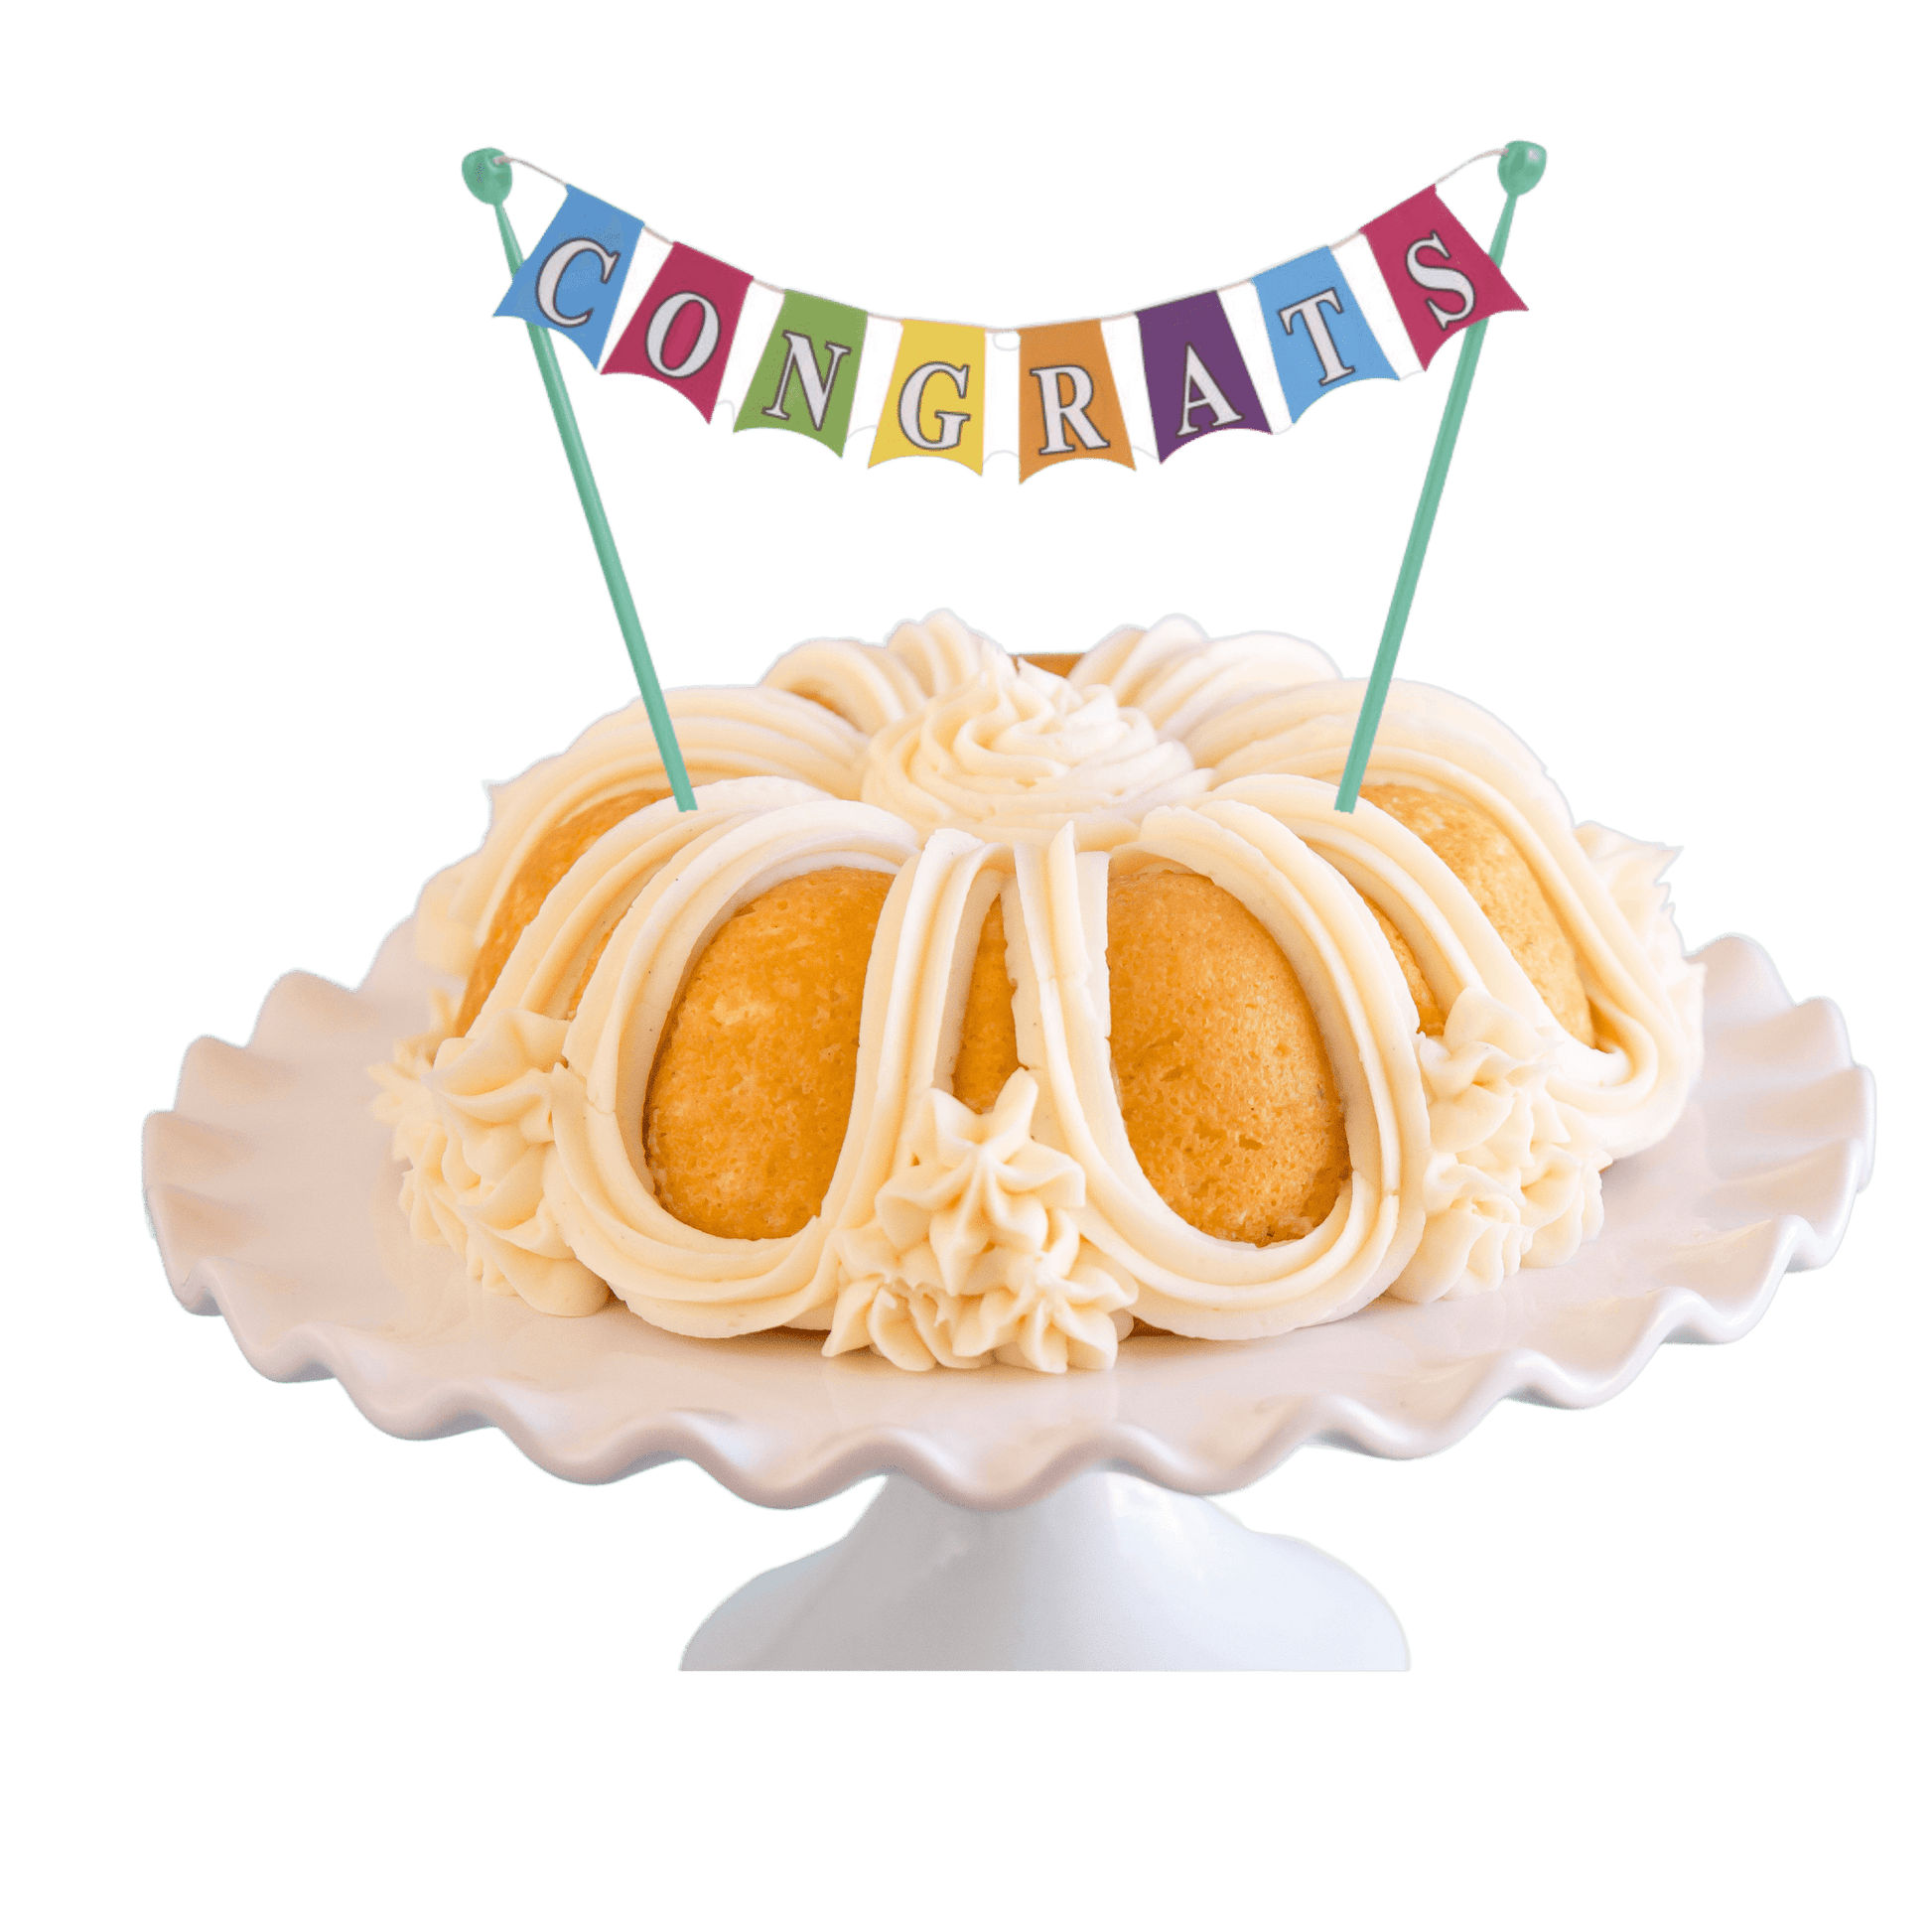 Vanilla Bean "CONGRATS" Banner Bundt Cake - Bundt Cakes